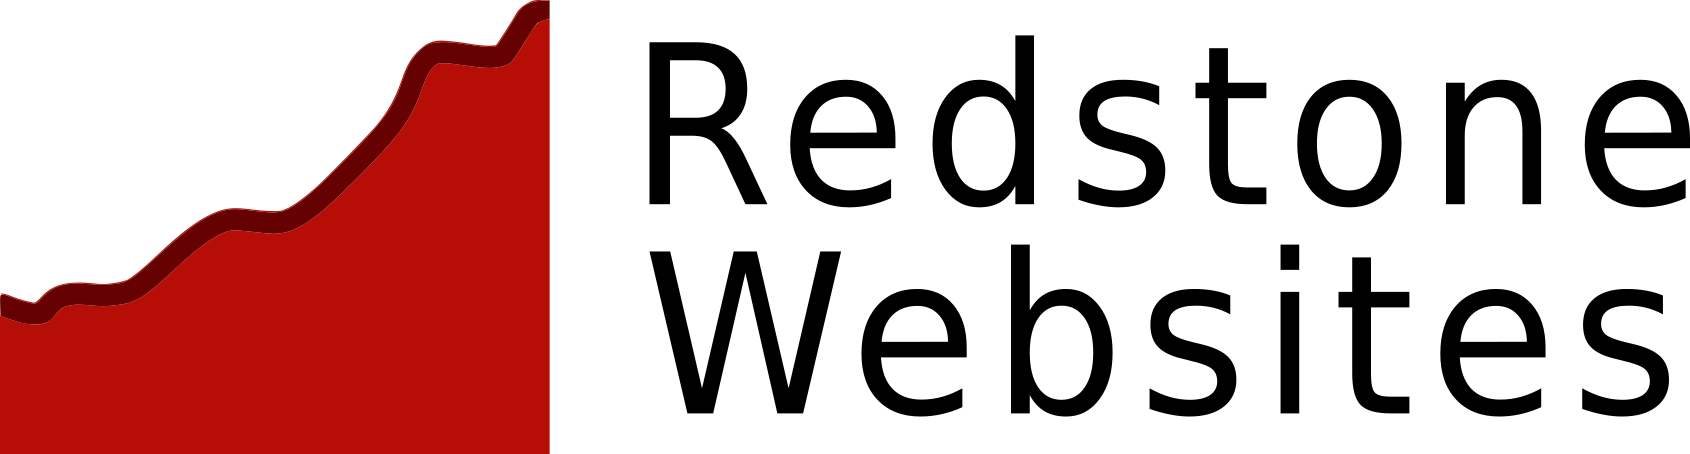 Redstone Websites logo